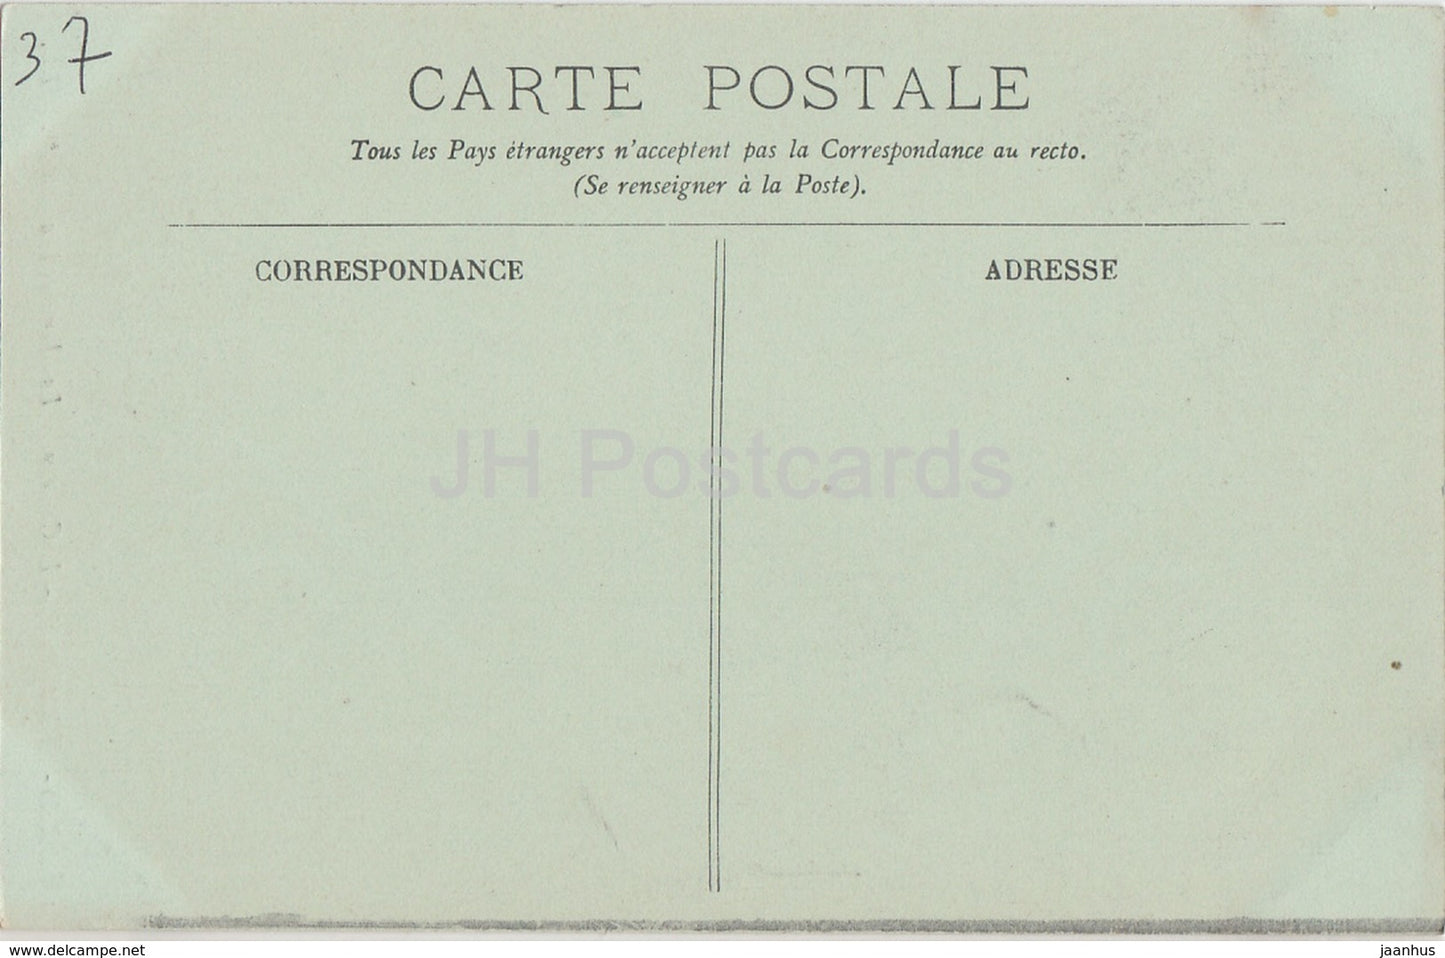 Azay Le Rideau - Le Chateau - La Cheminee Francois Ier - castle - 18 - old postcard - France - unused